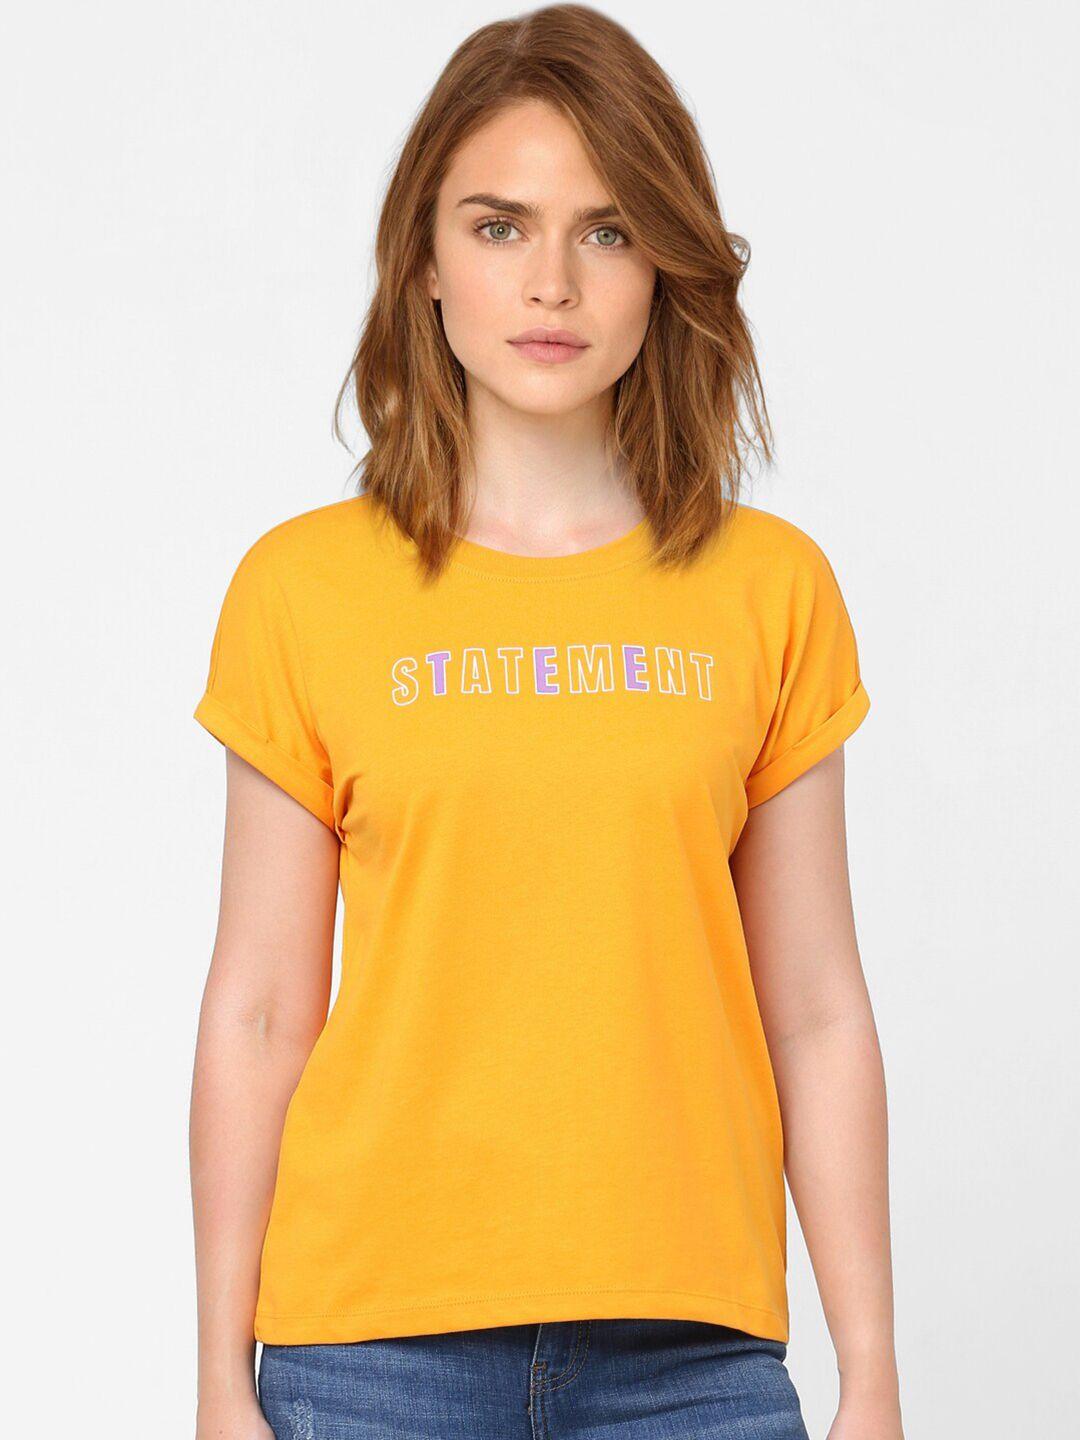 vero moda women yellow typography printed cotton t-shirt